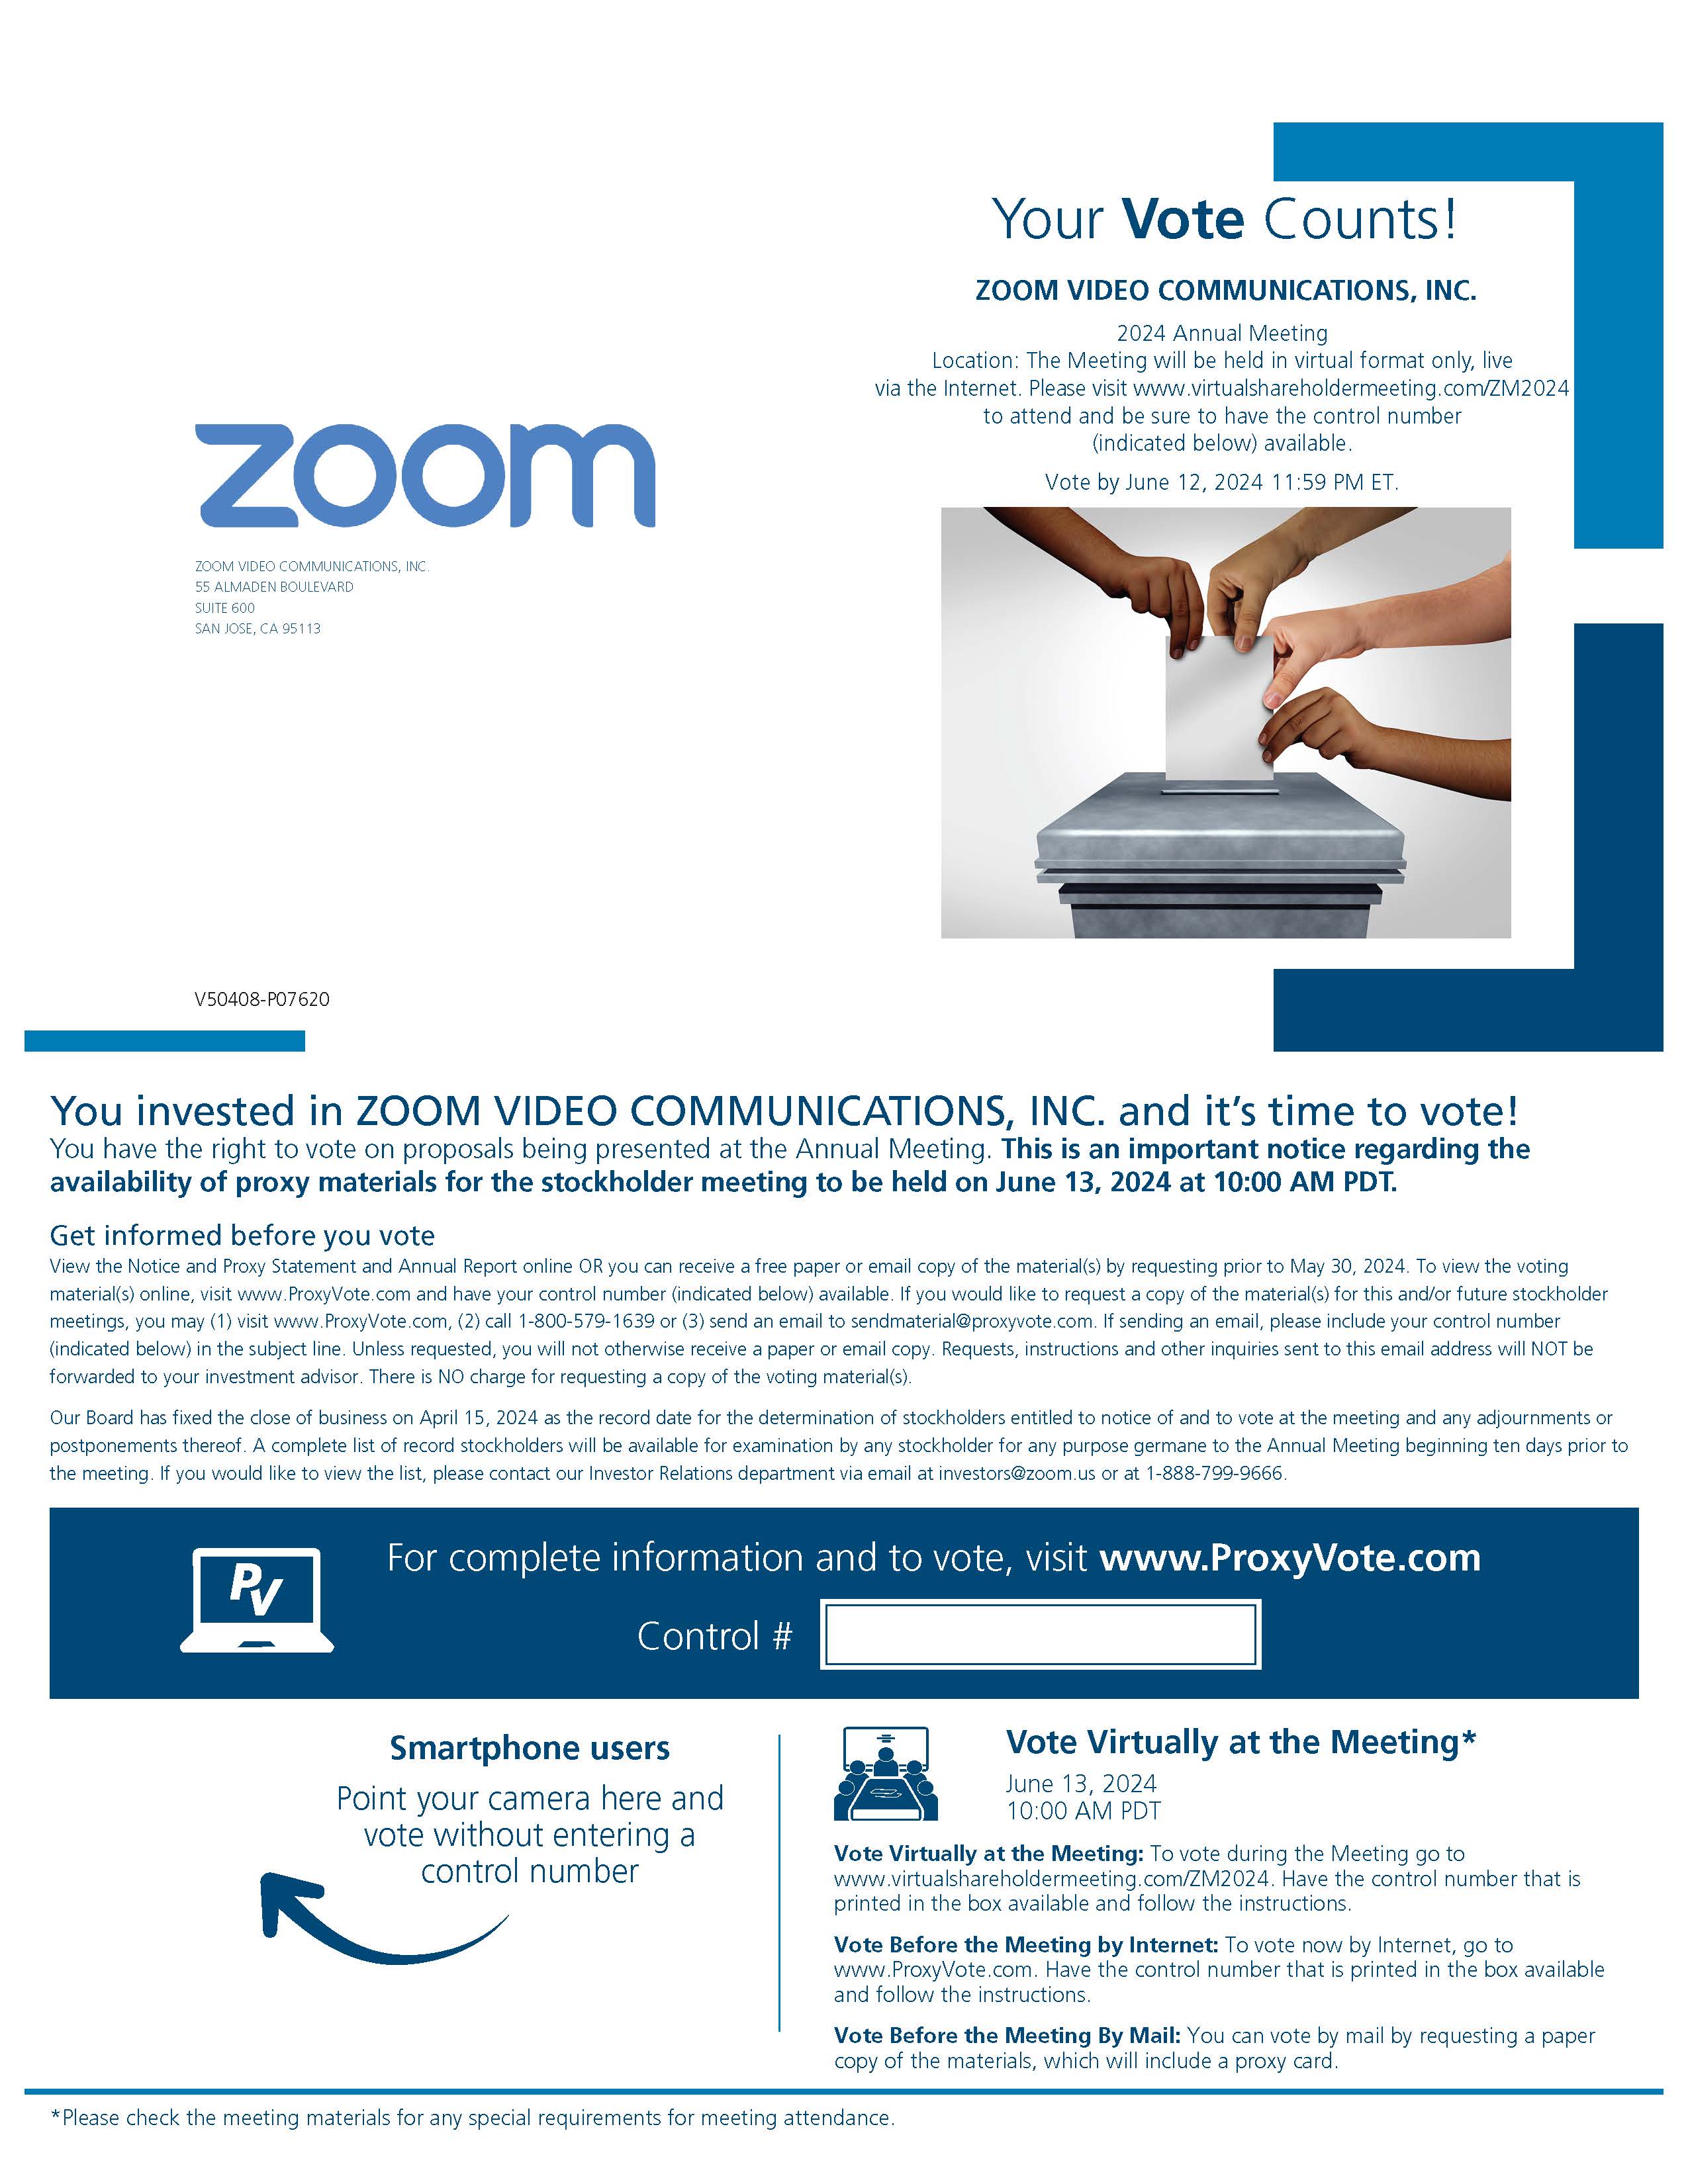 zoomvideocommunicationsinc.jpg